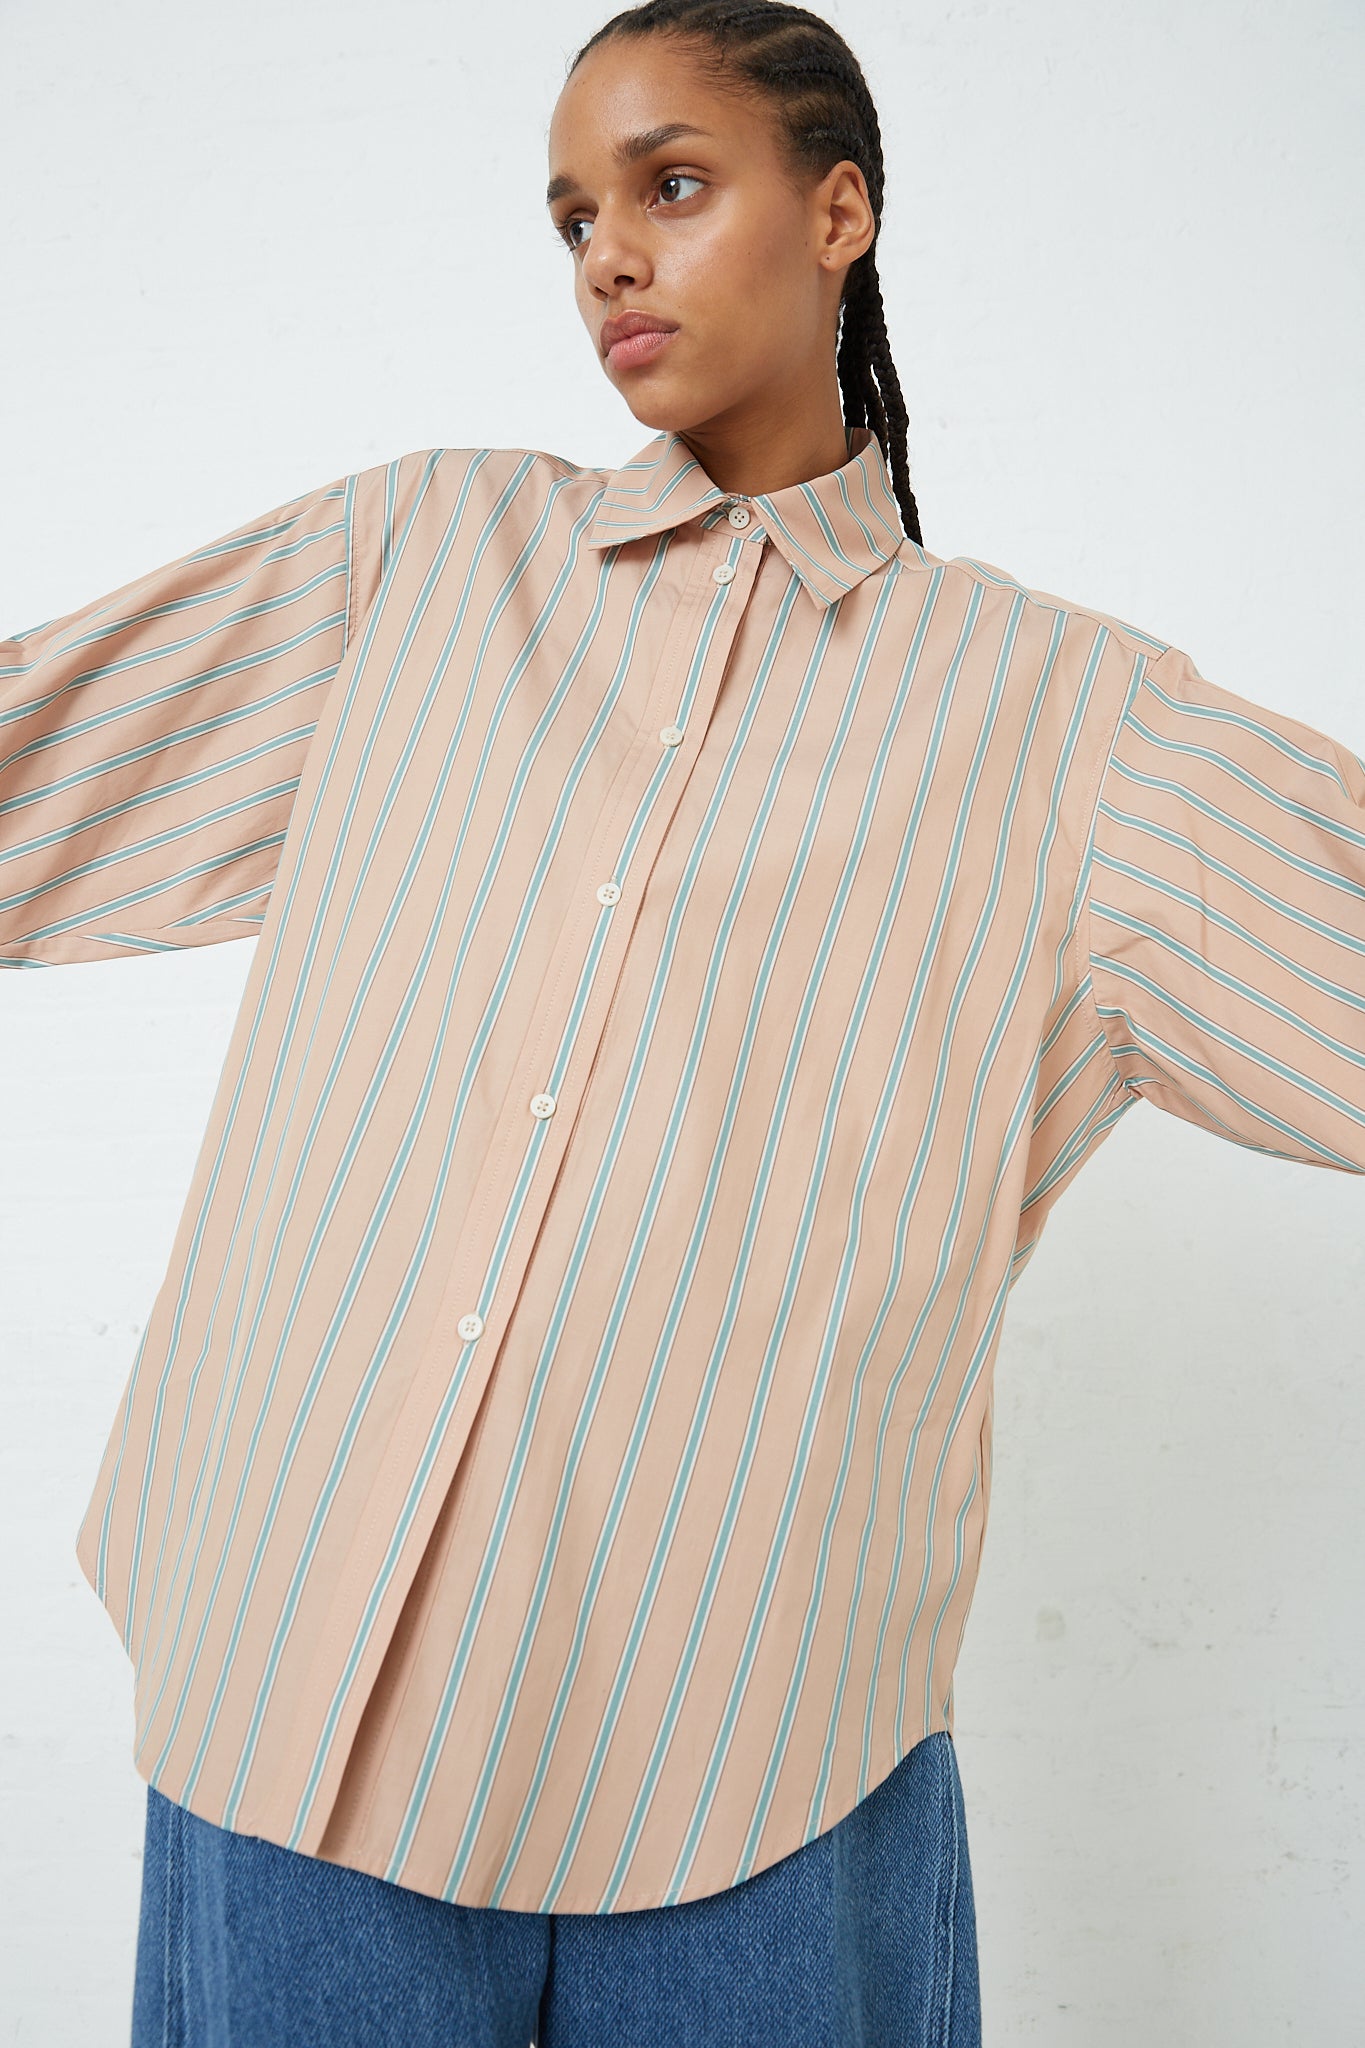 The model is wearing a Rachel Comey Stripe Broadcloth Risa Top in Terracotta.